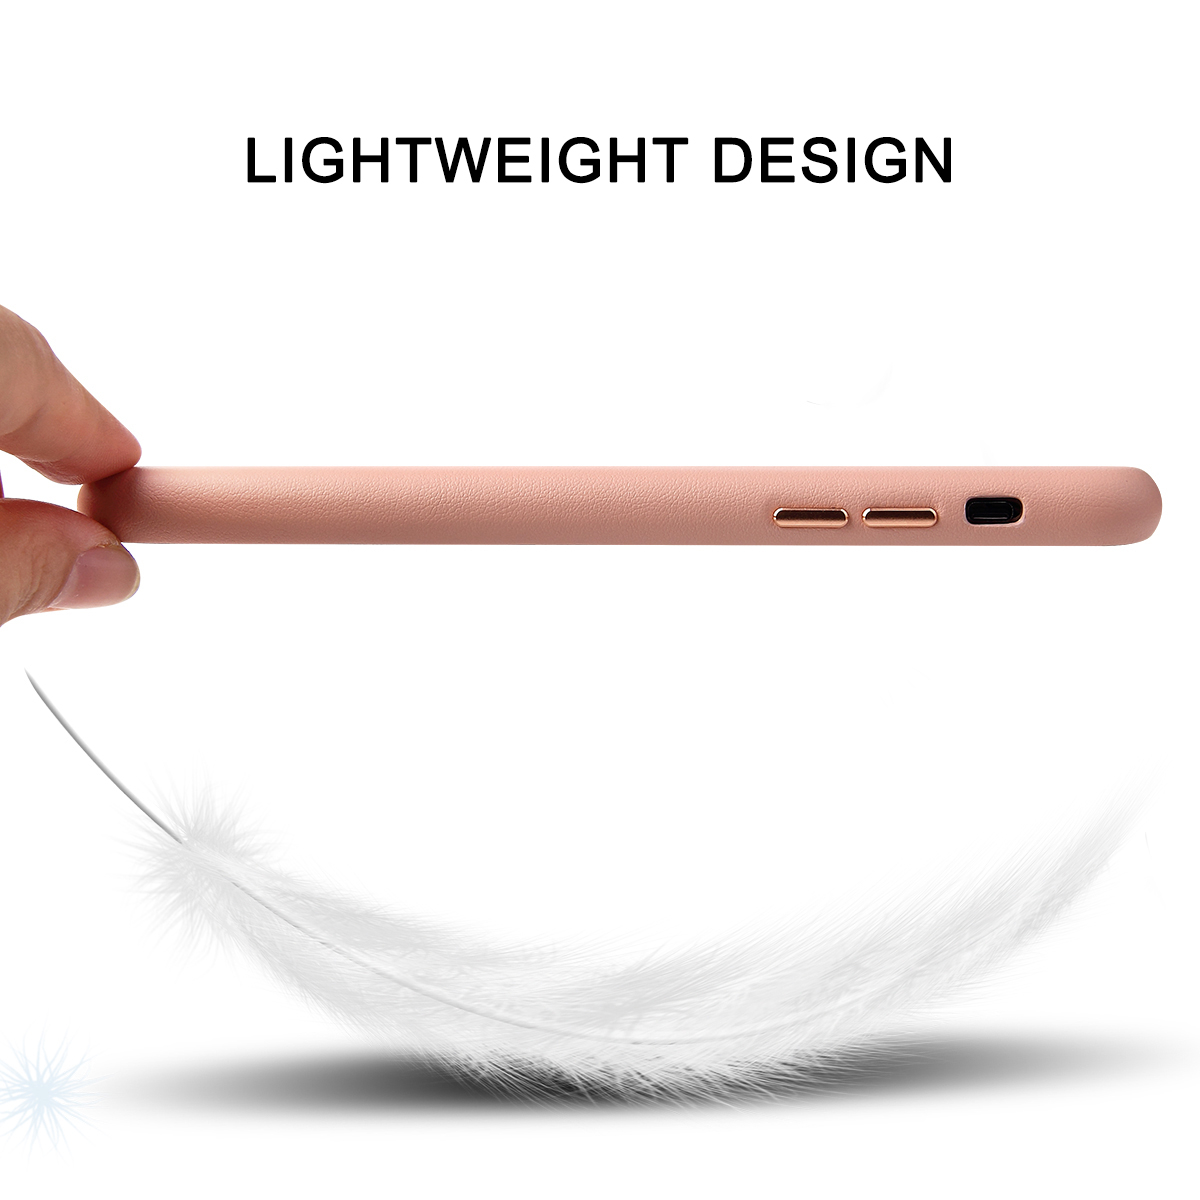 Luxury Slim läderskal till iPhone 6/6S, rosa